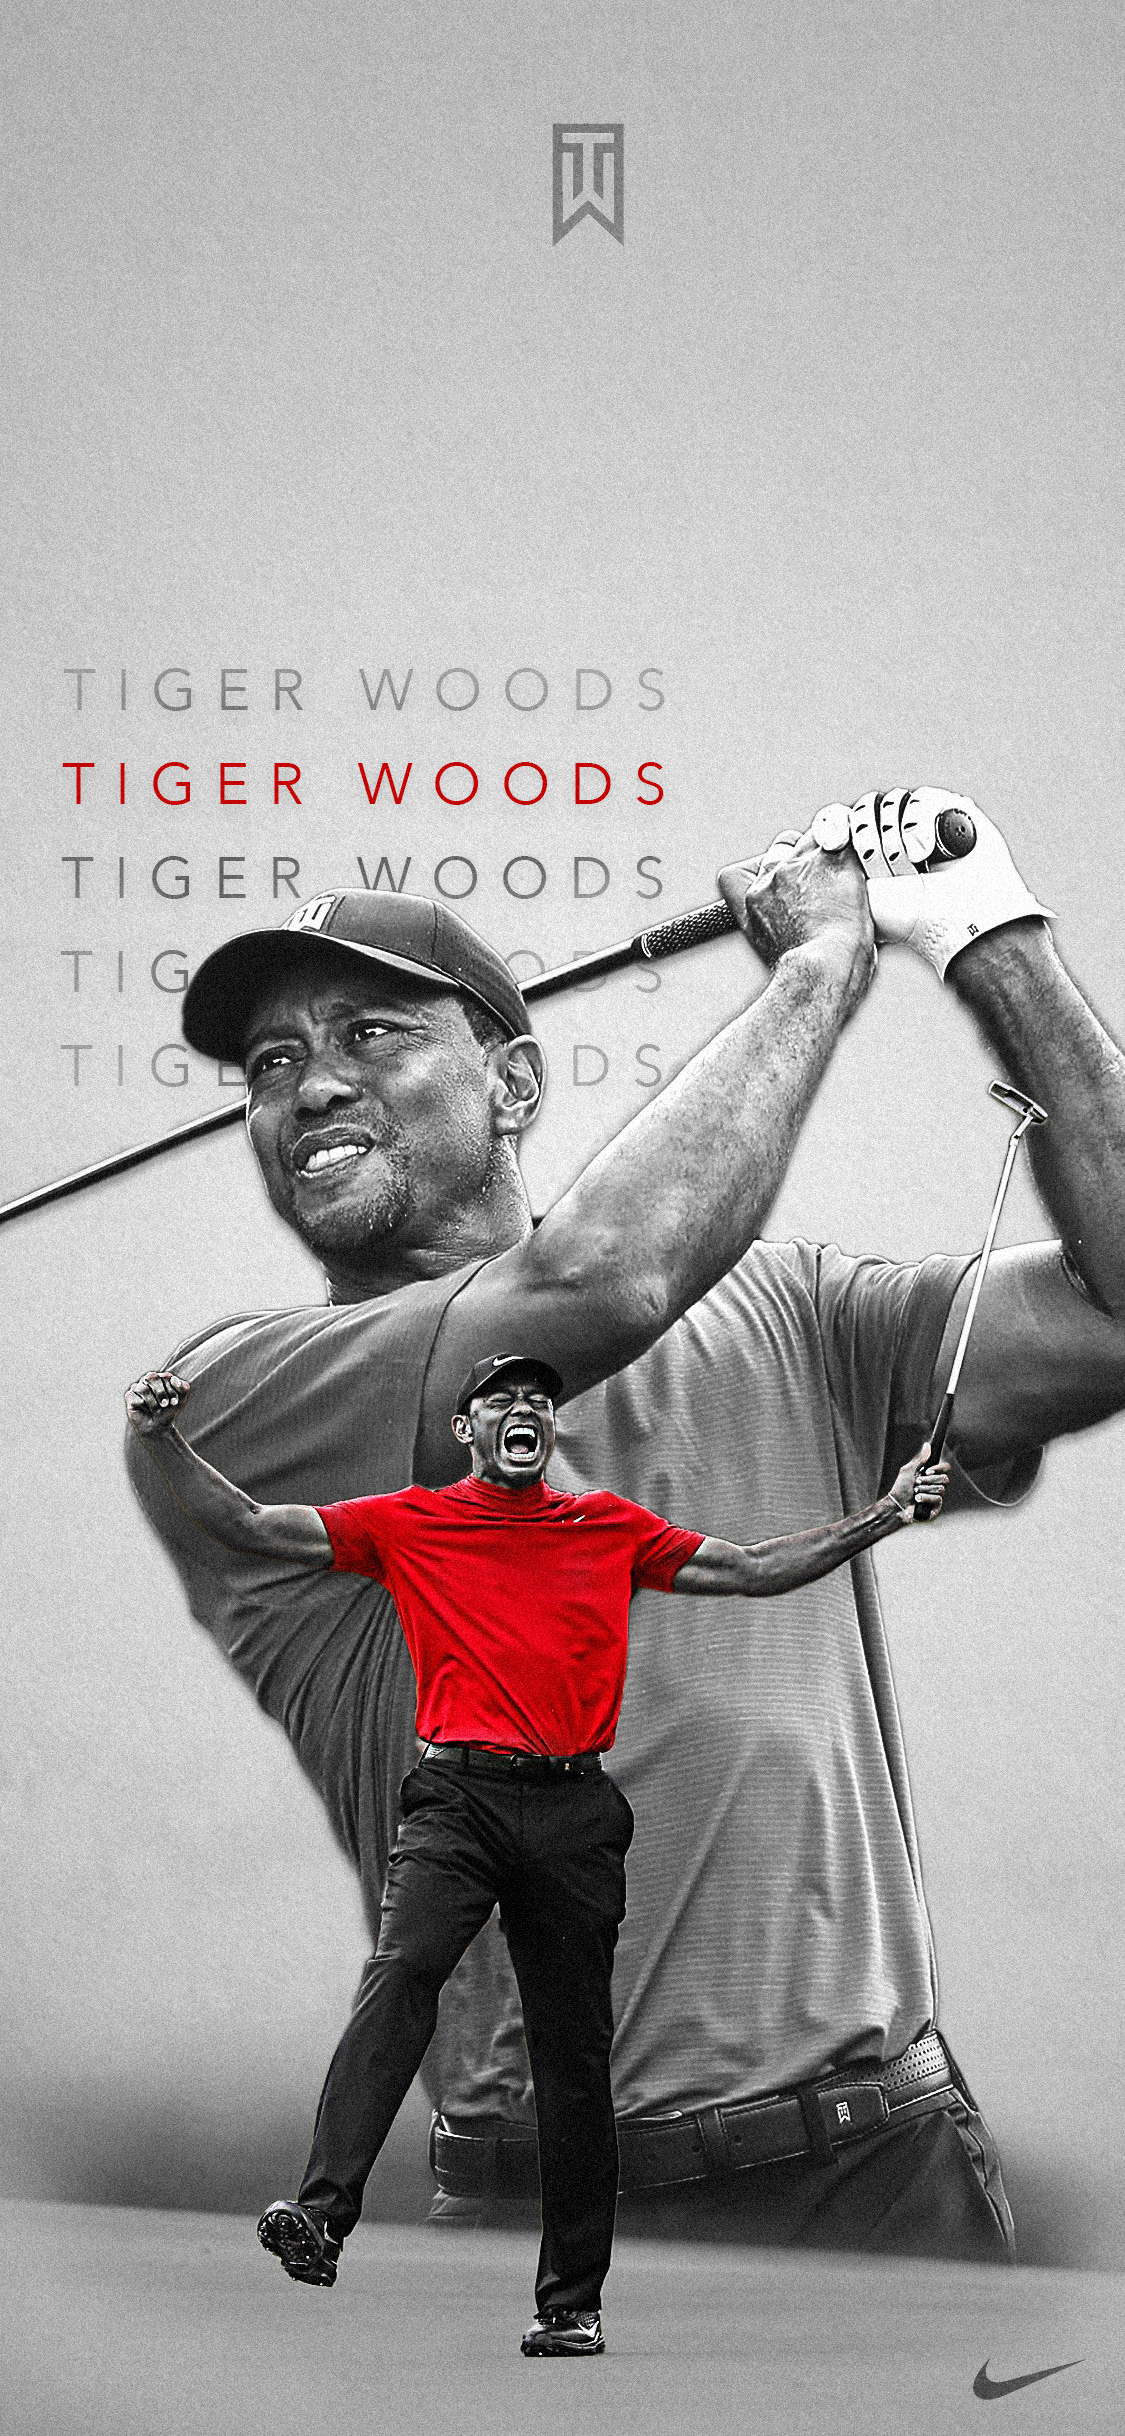 Tiger Woods Wallpaper 2019 - Ex Wallpaper